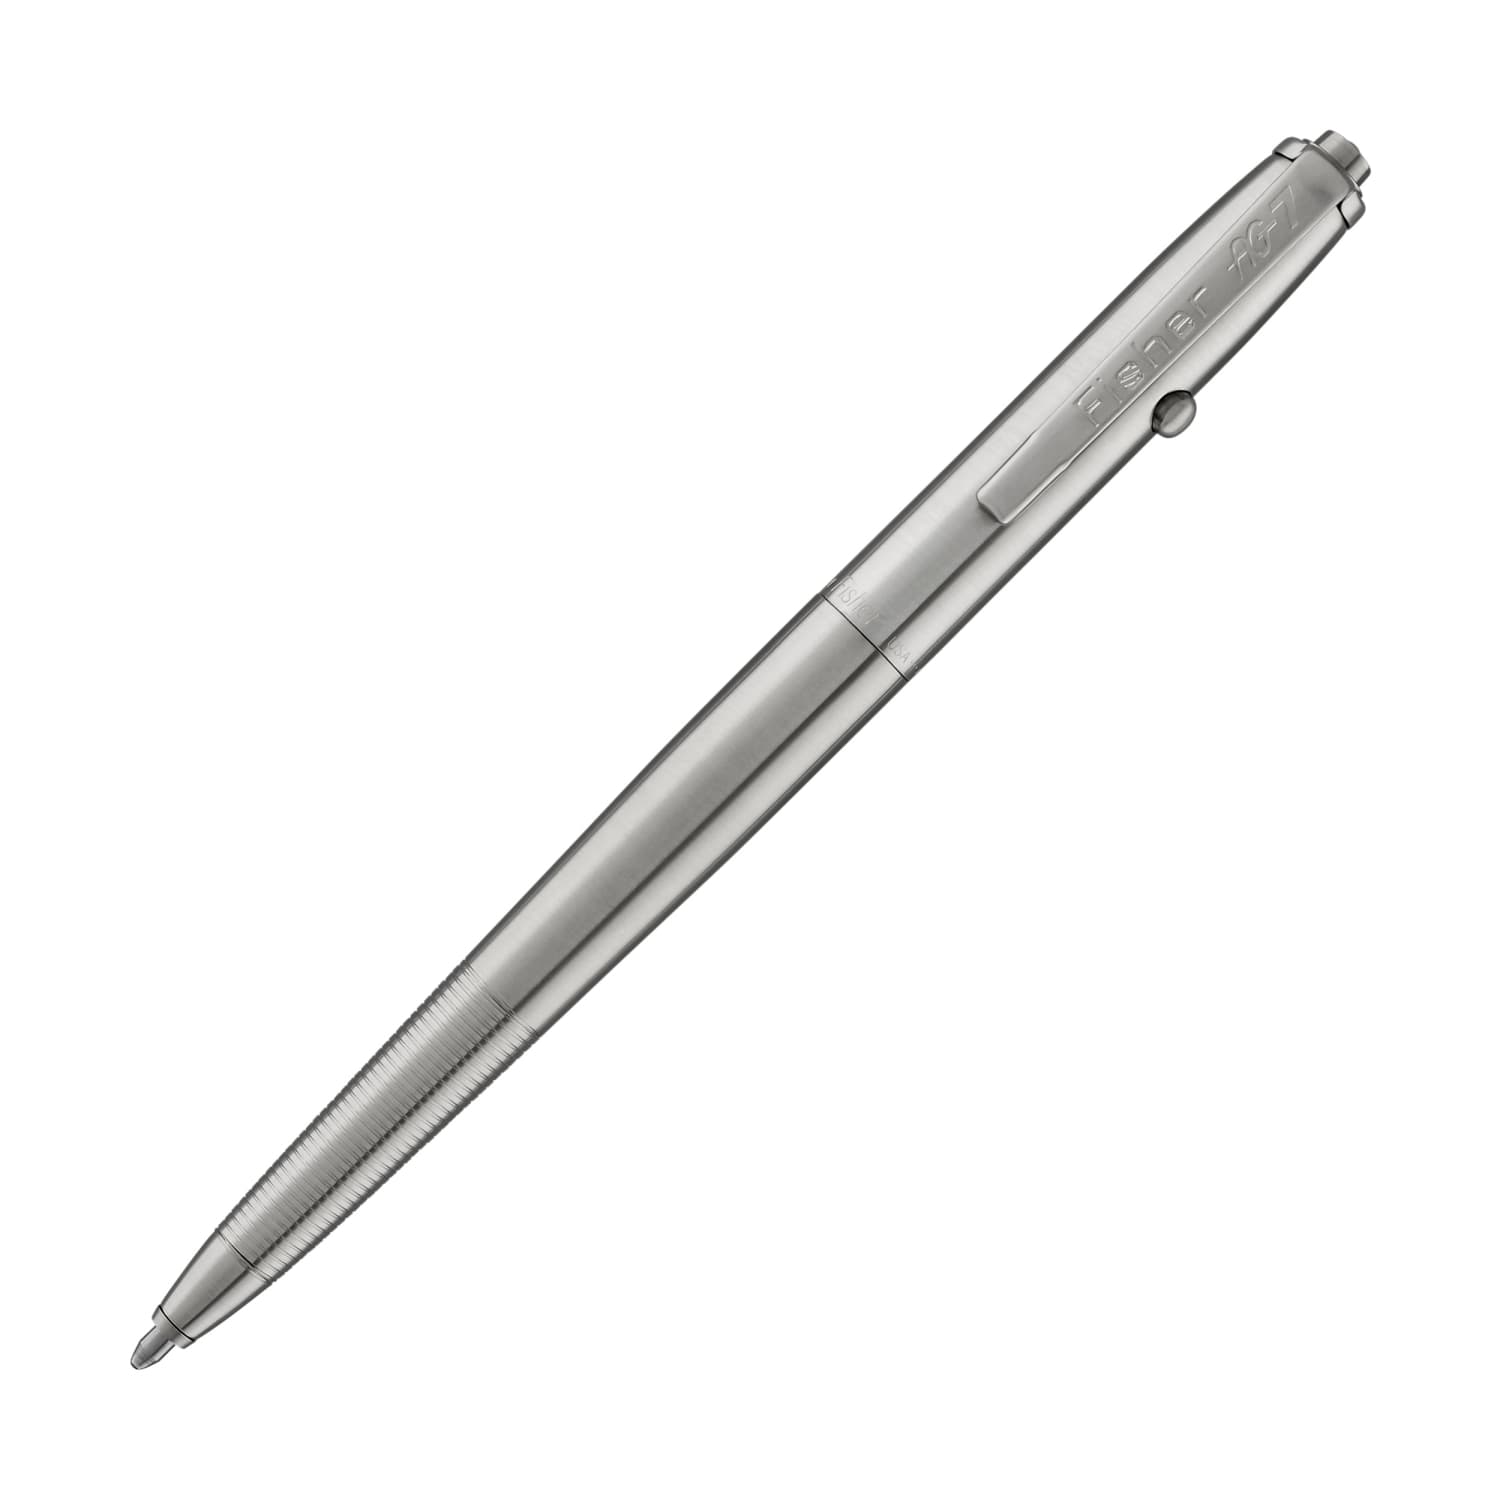 AG7 - The Original Astronaut Pen